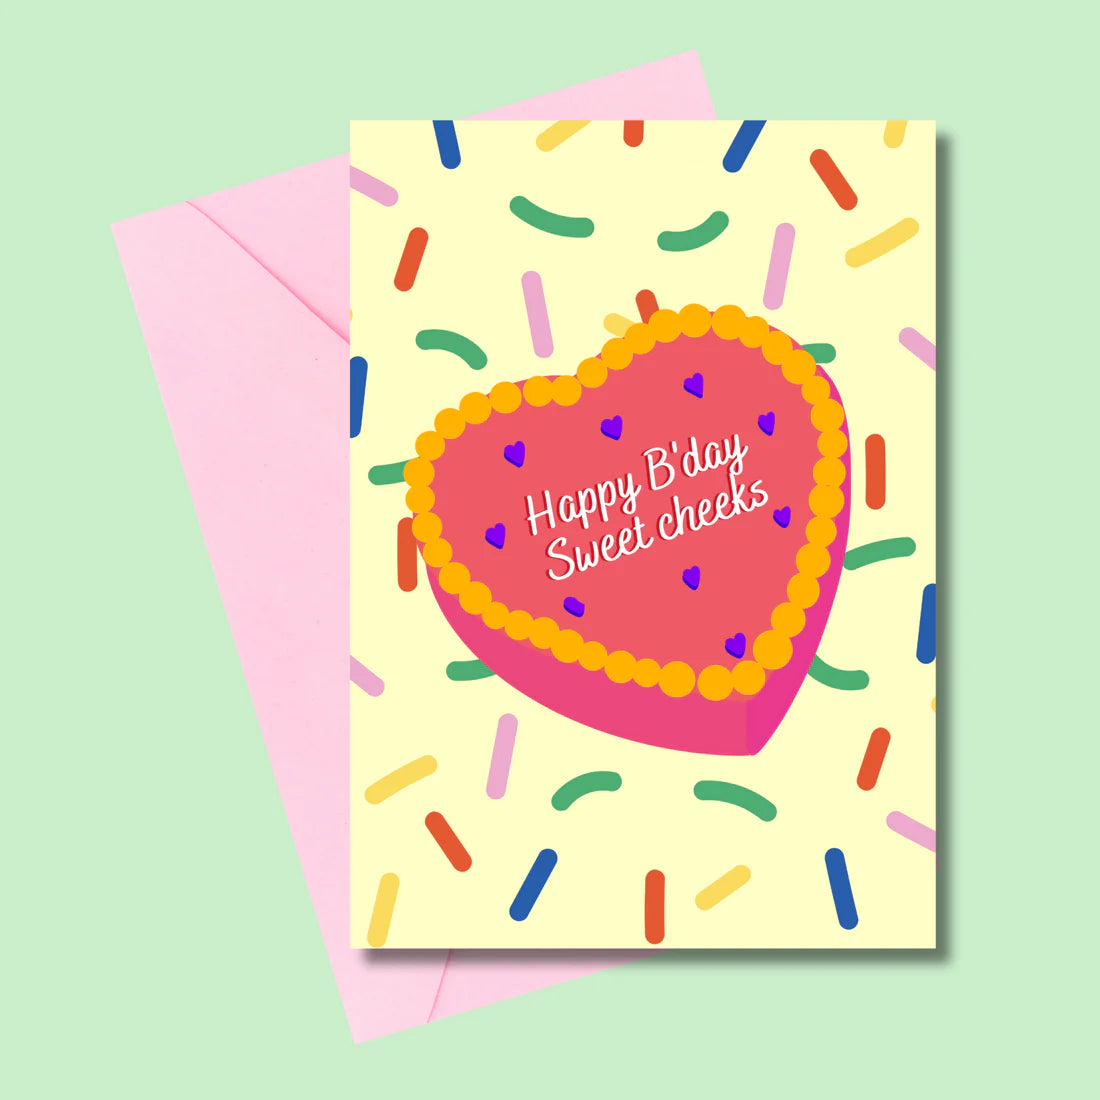 Cards - "Happy B'day Sweet Cheeks"